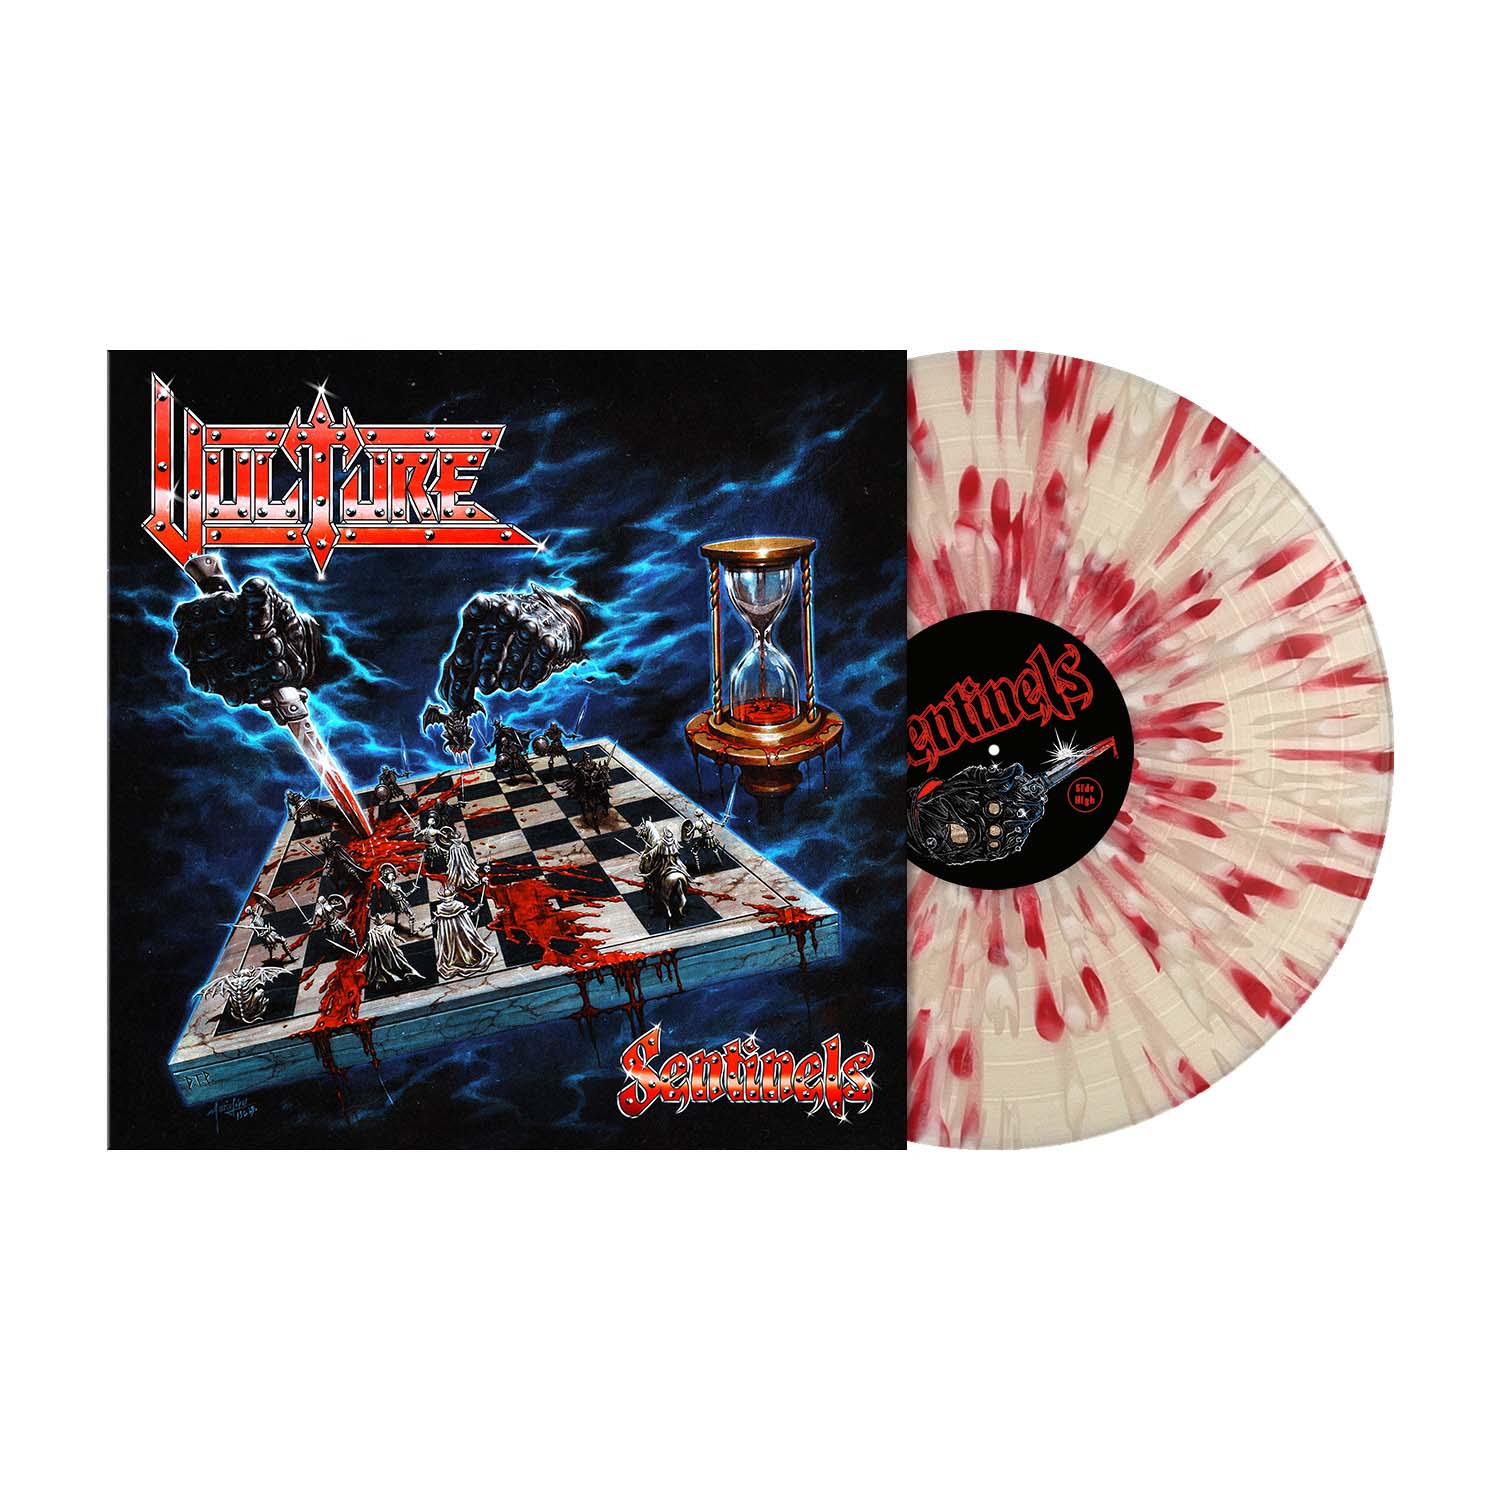 Vulture "Sentinels" Blood Red / White Splatter Vinyl (Ltd to 200) - PRE-ORDER